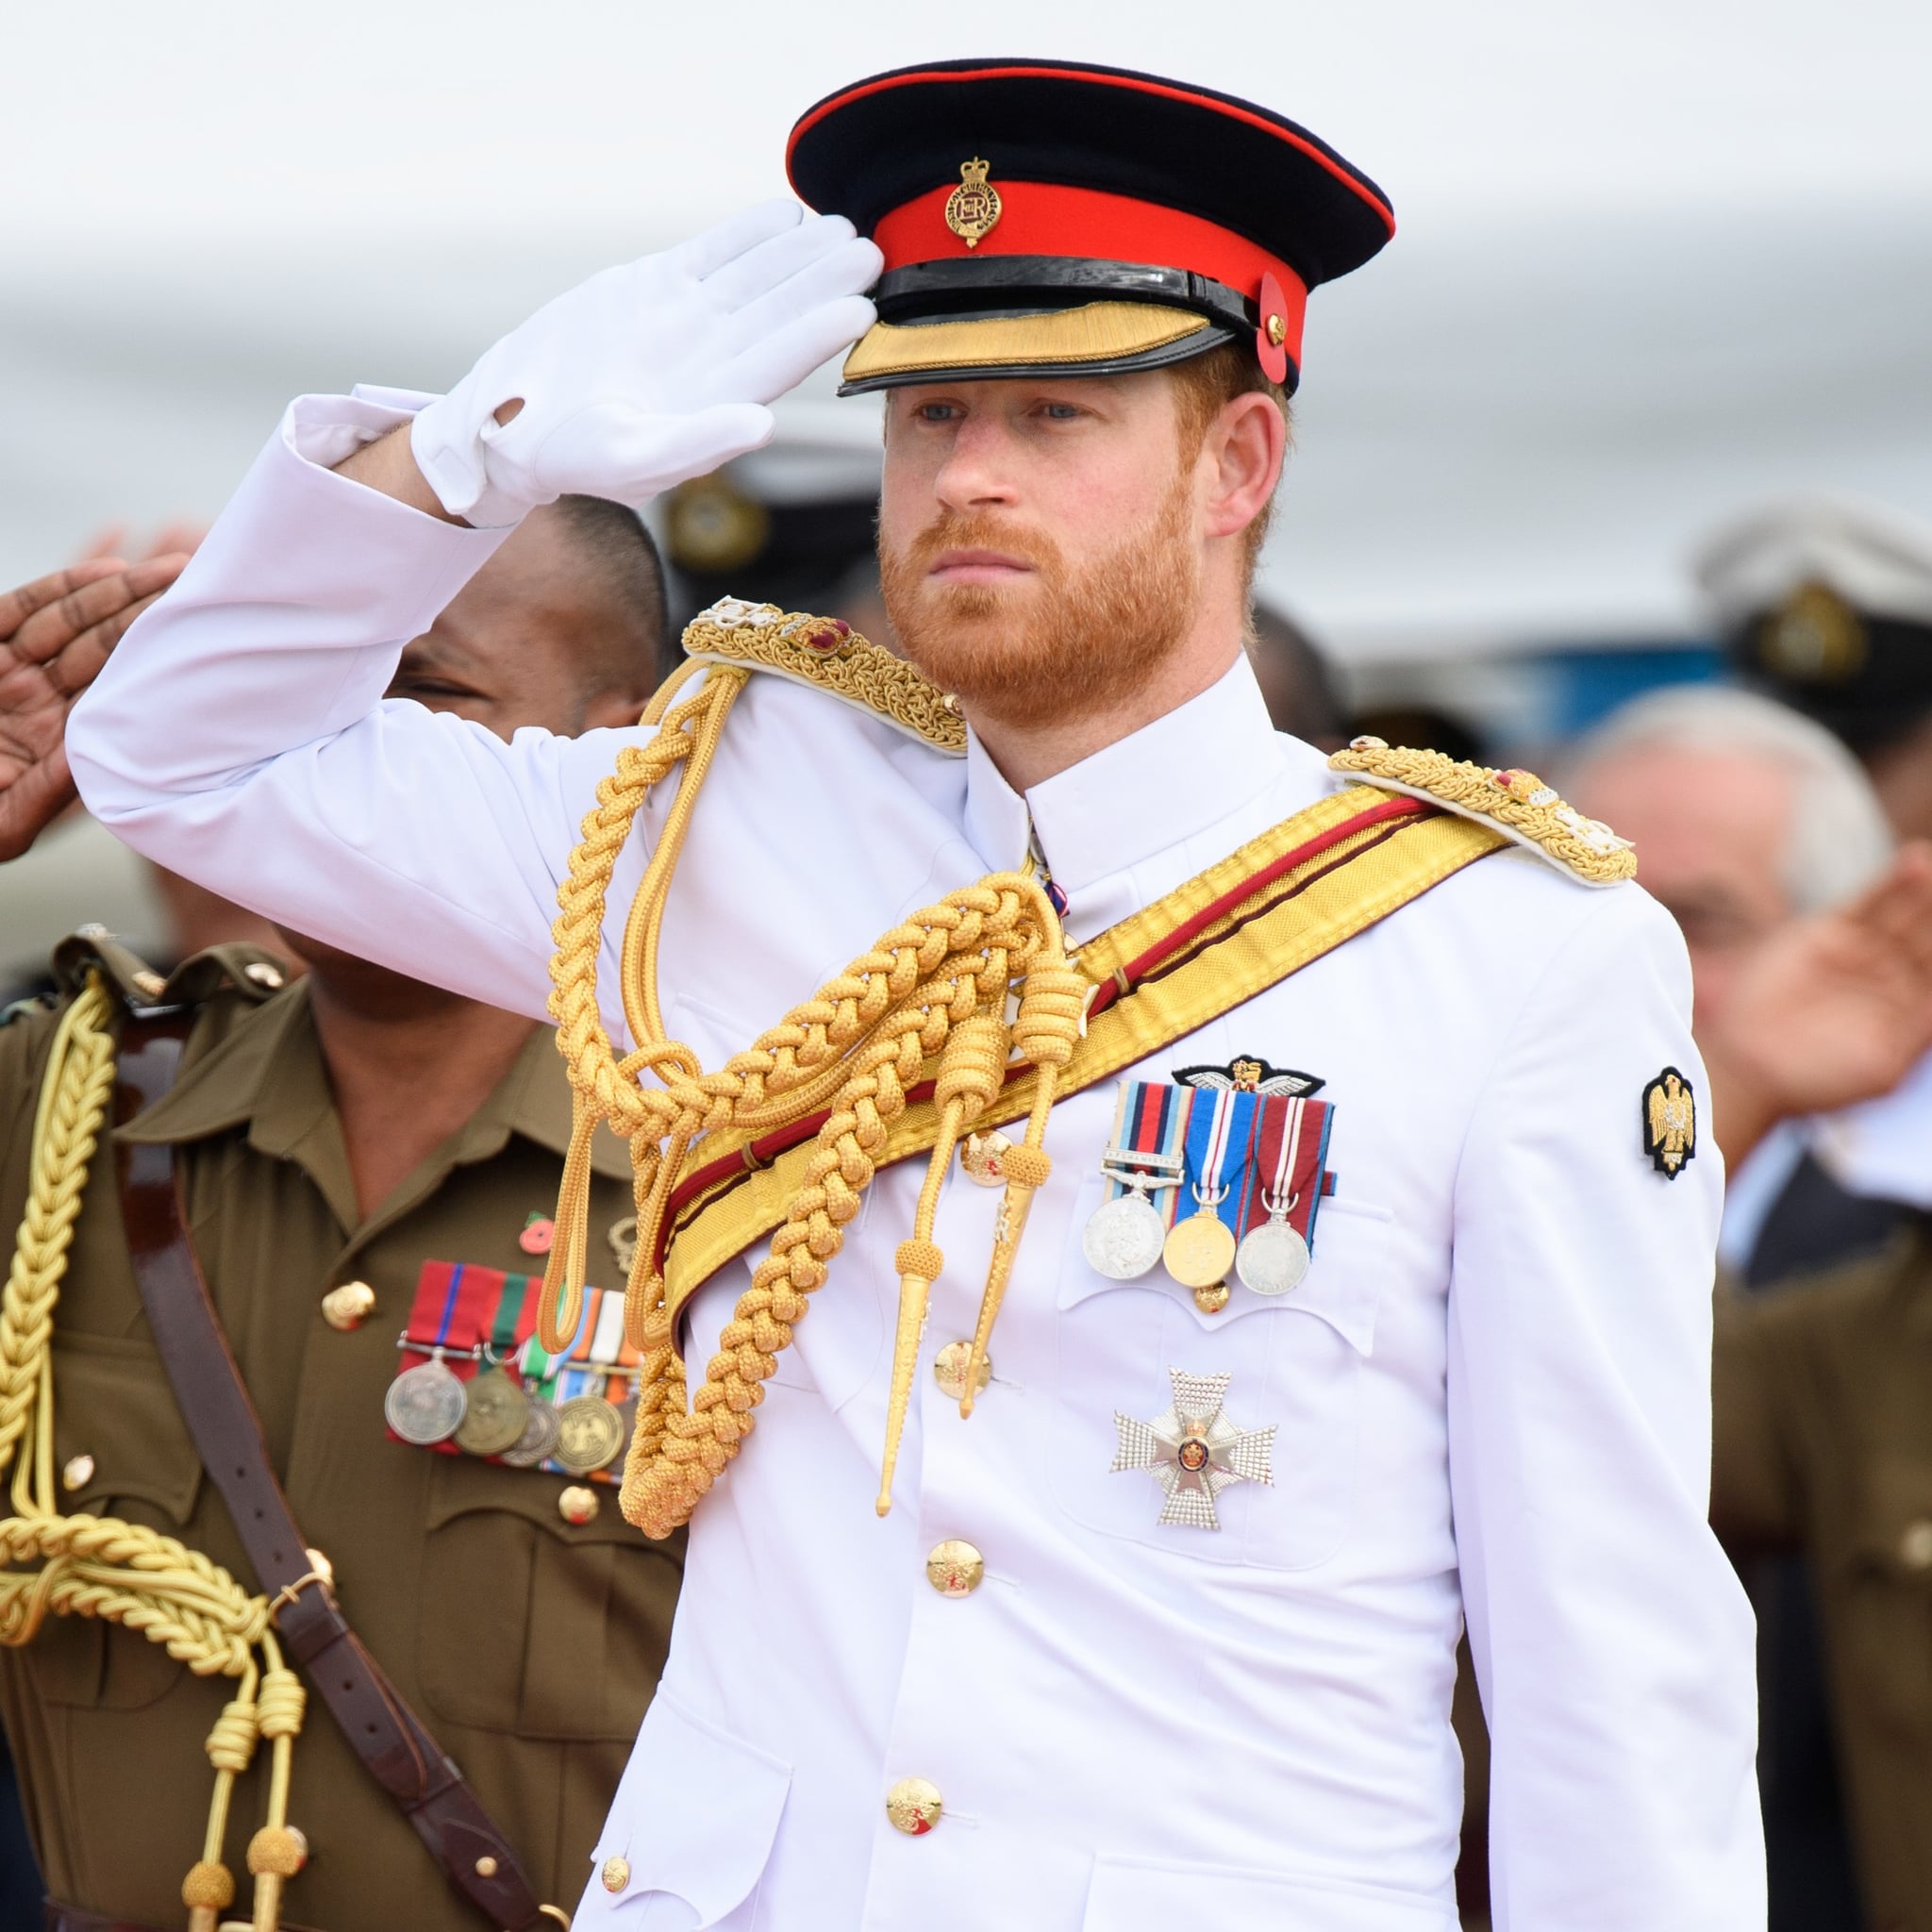 Prince Harry in Uniform Pictures | POPSUGAR Celebrity